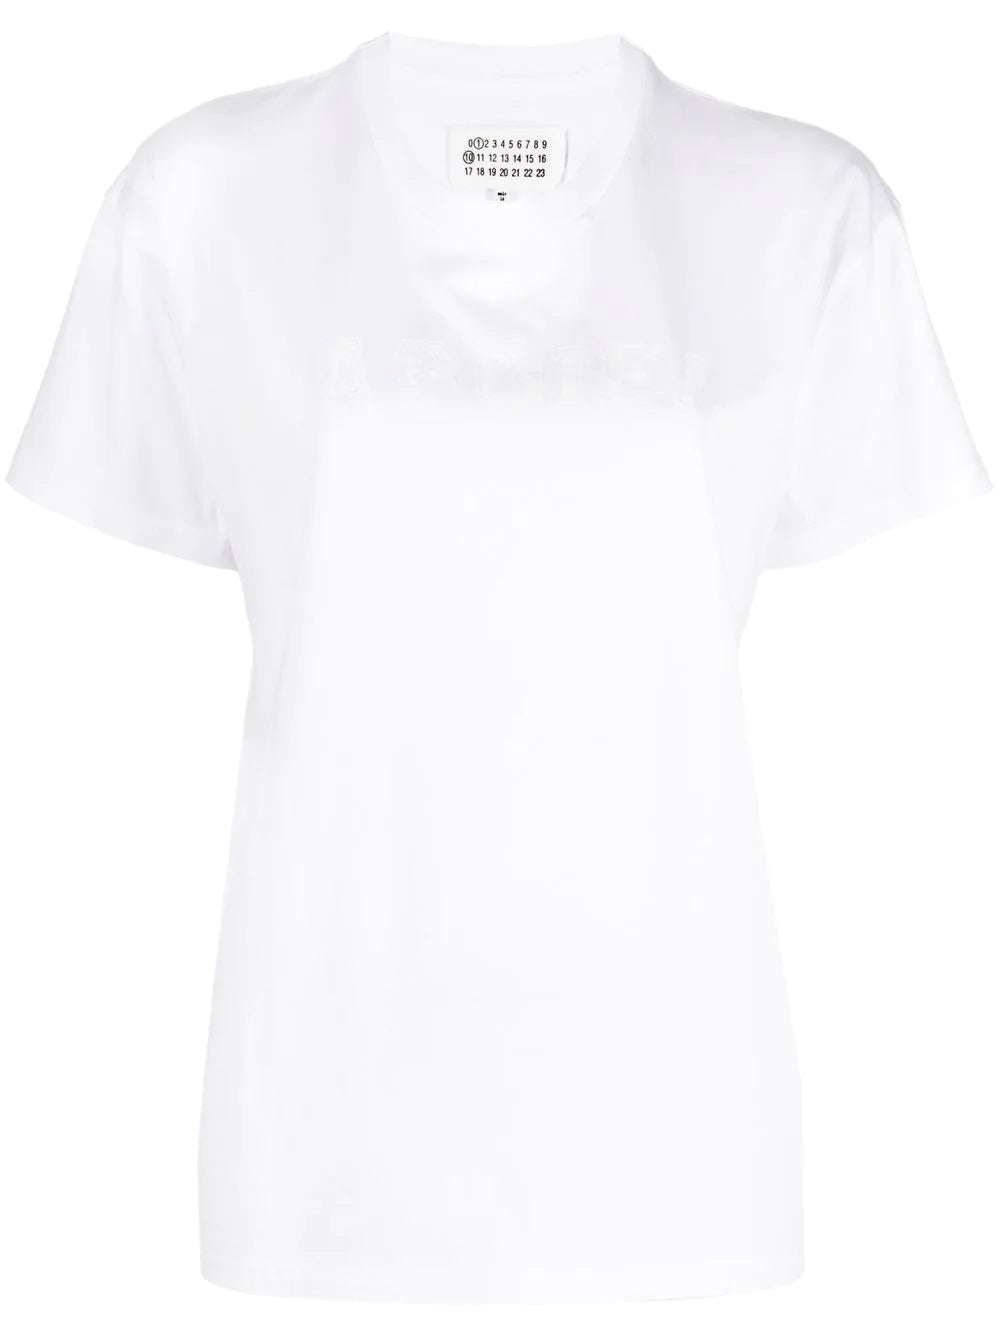 Maison Margiela crew neck white t-shirt | SHEET-1